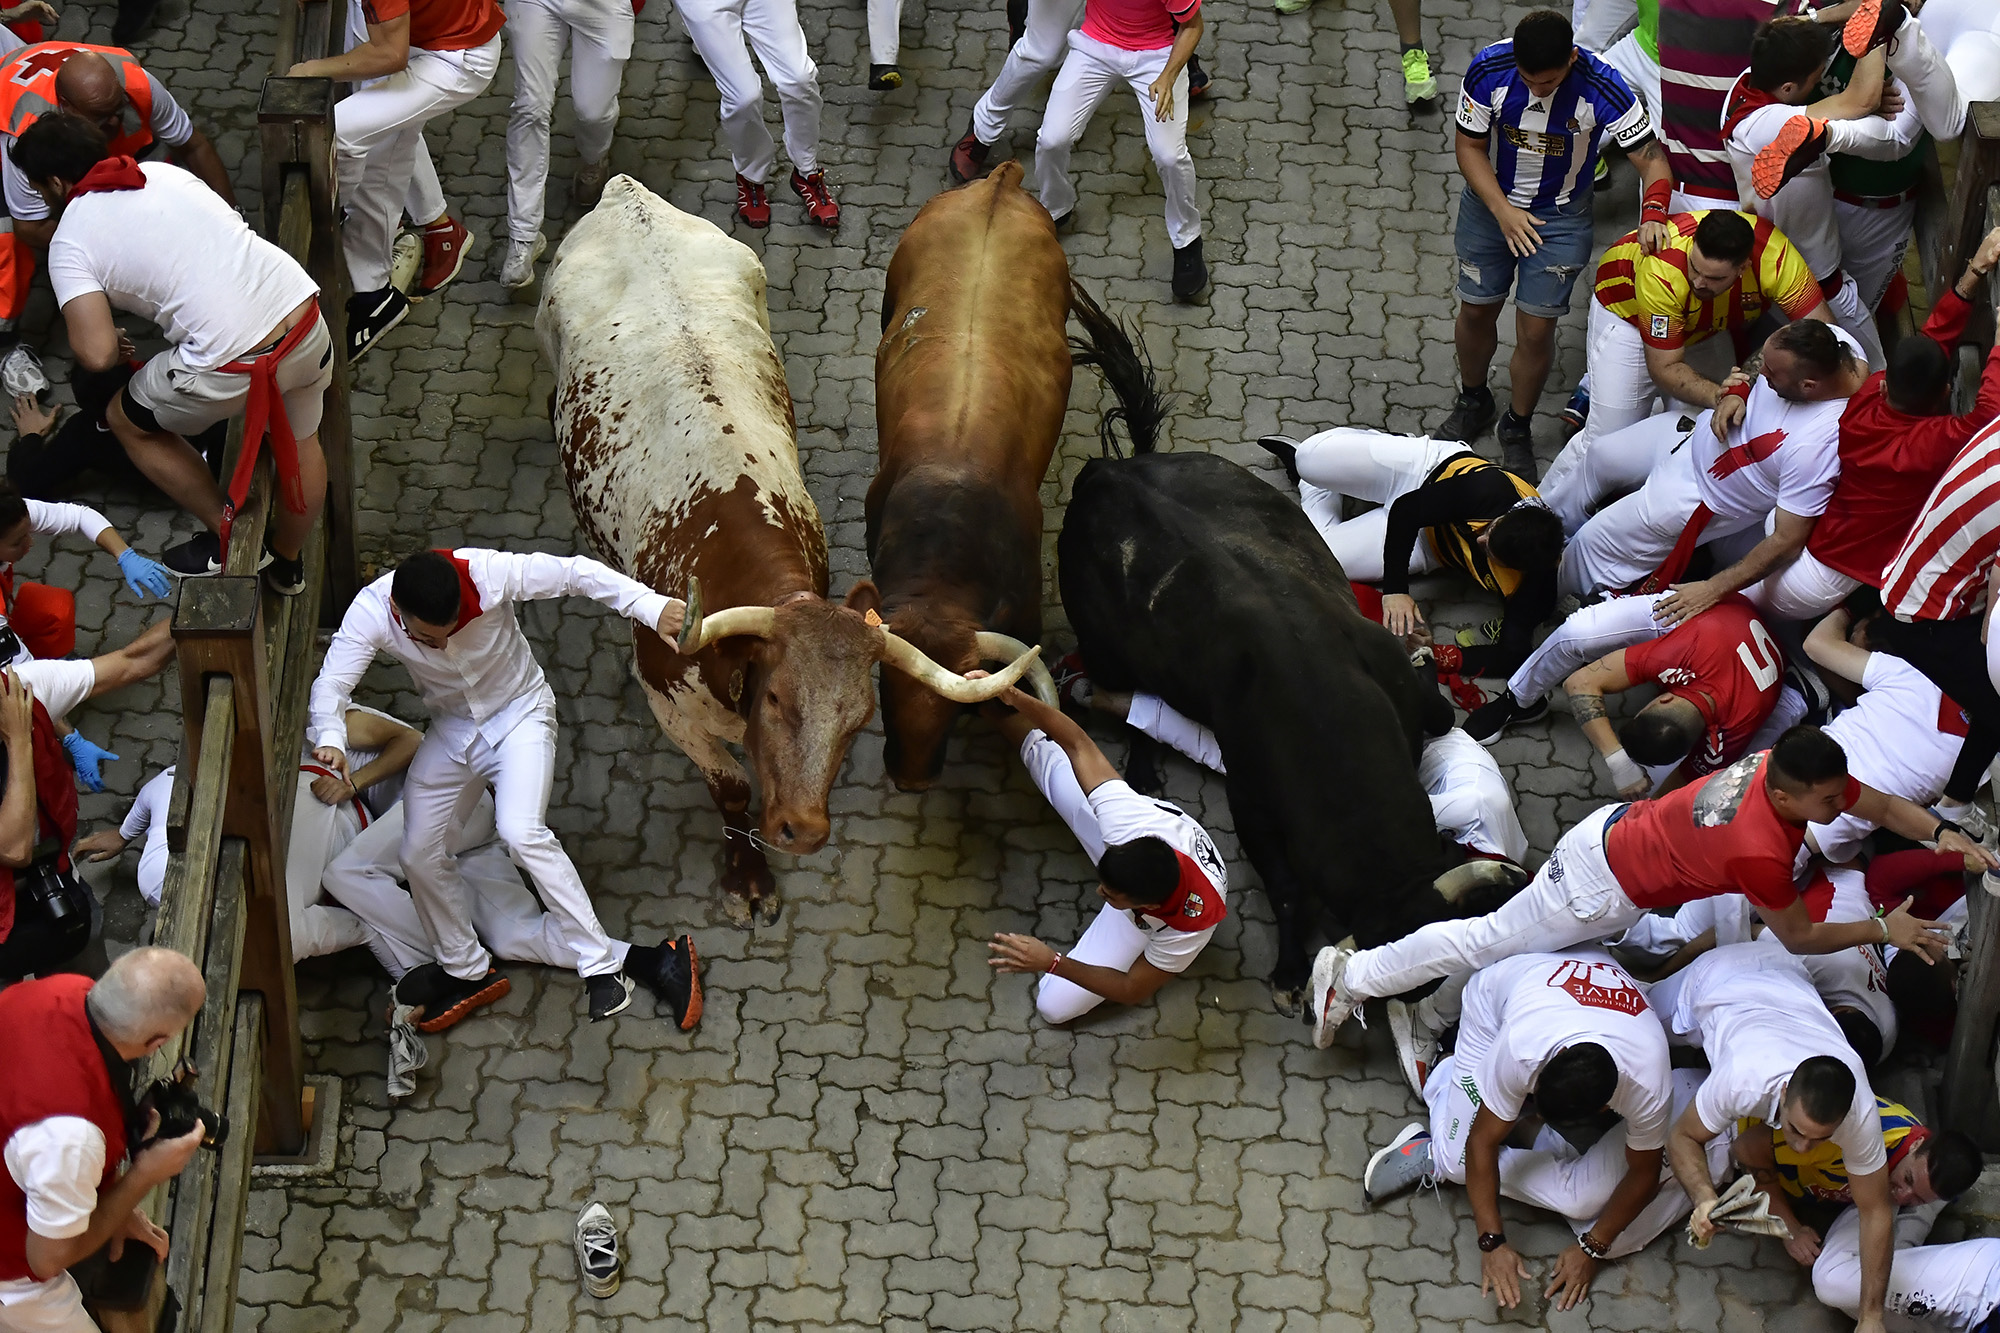 No bull: San Fermin bull-running festival in Pamplona canceled for